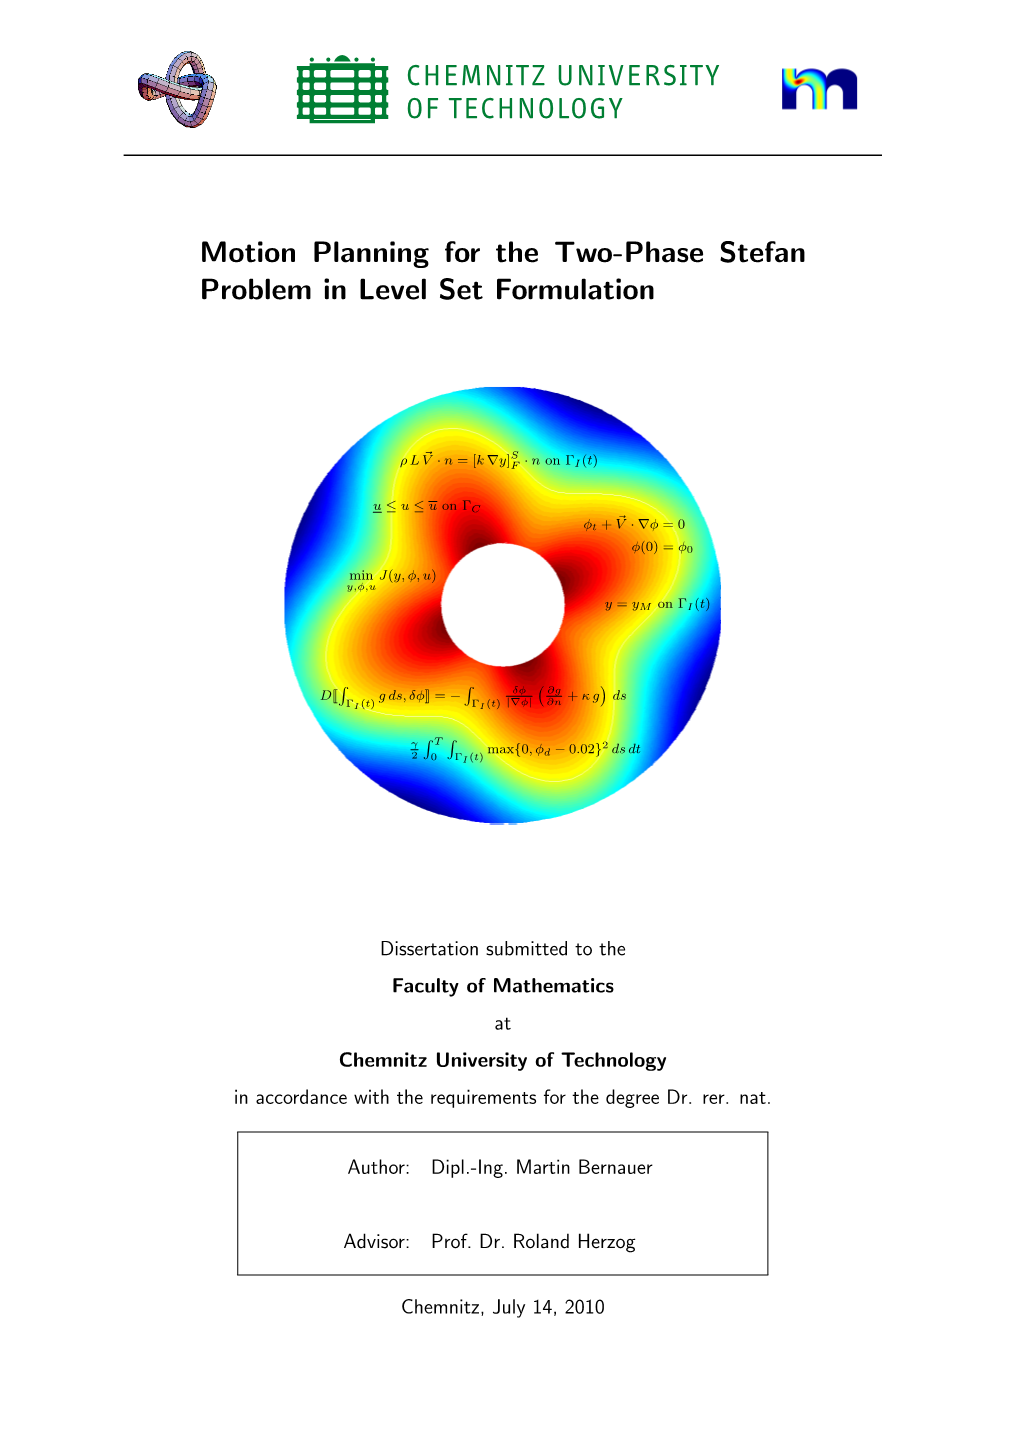 Motion Planning for the Two-Phase Stefan Problem in Level Set Formulation